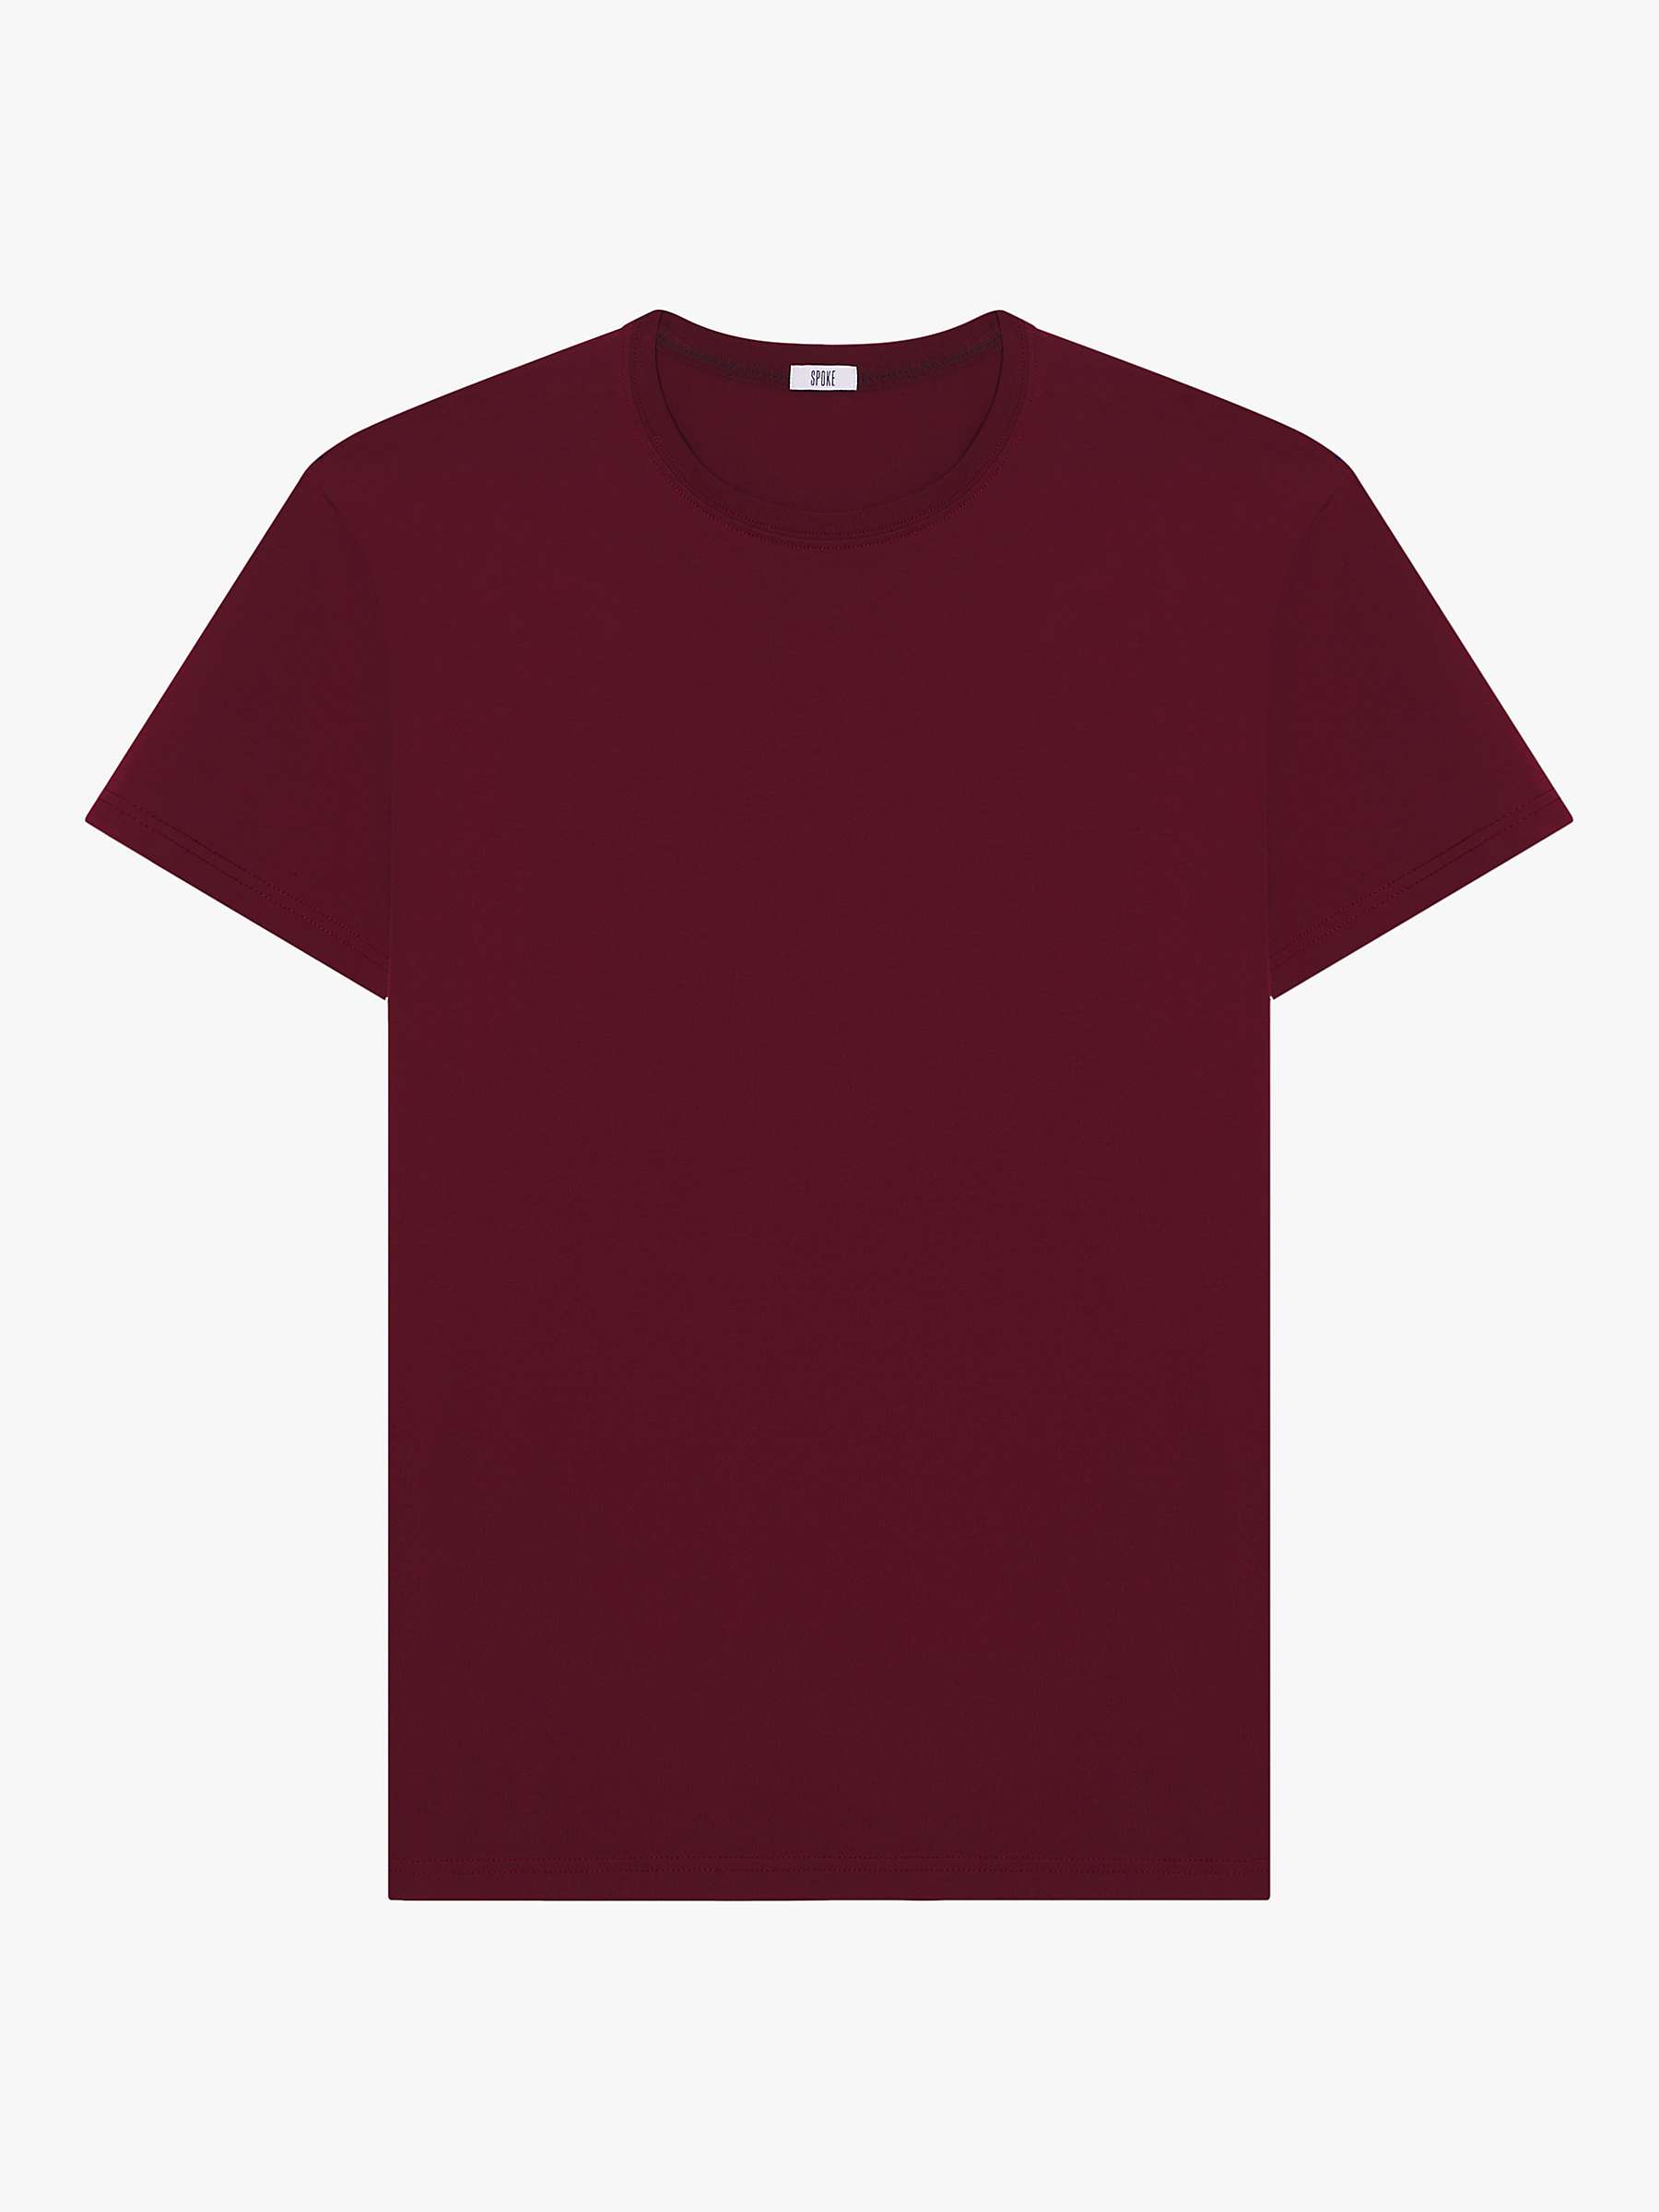 Buy SPOKE Slim Cut T-Shirt Online at johnlewis.com